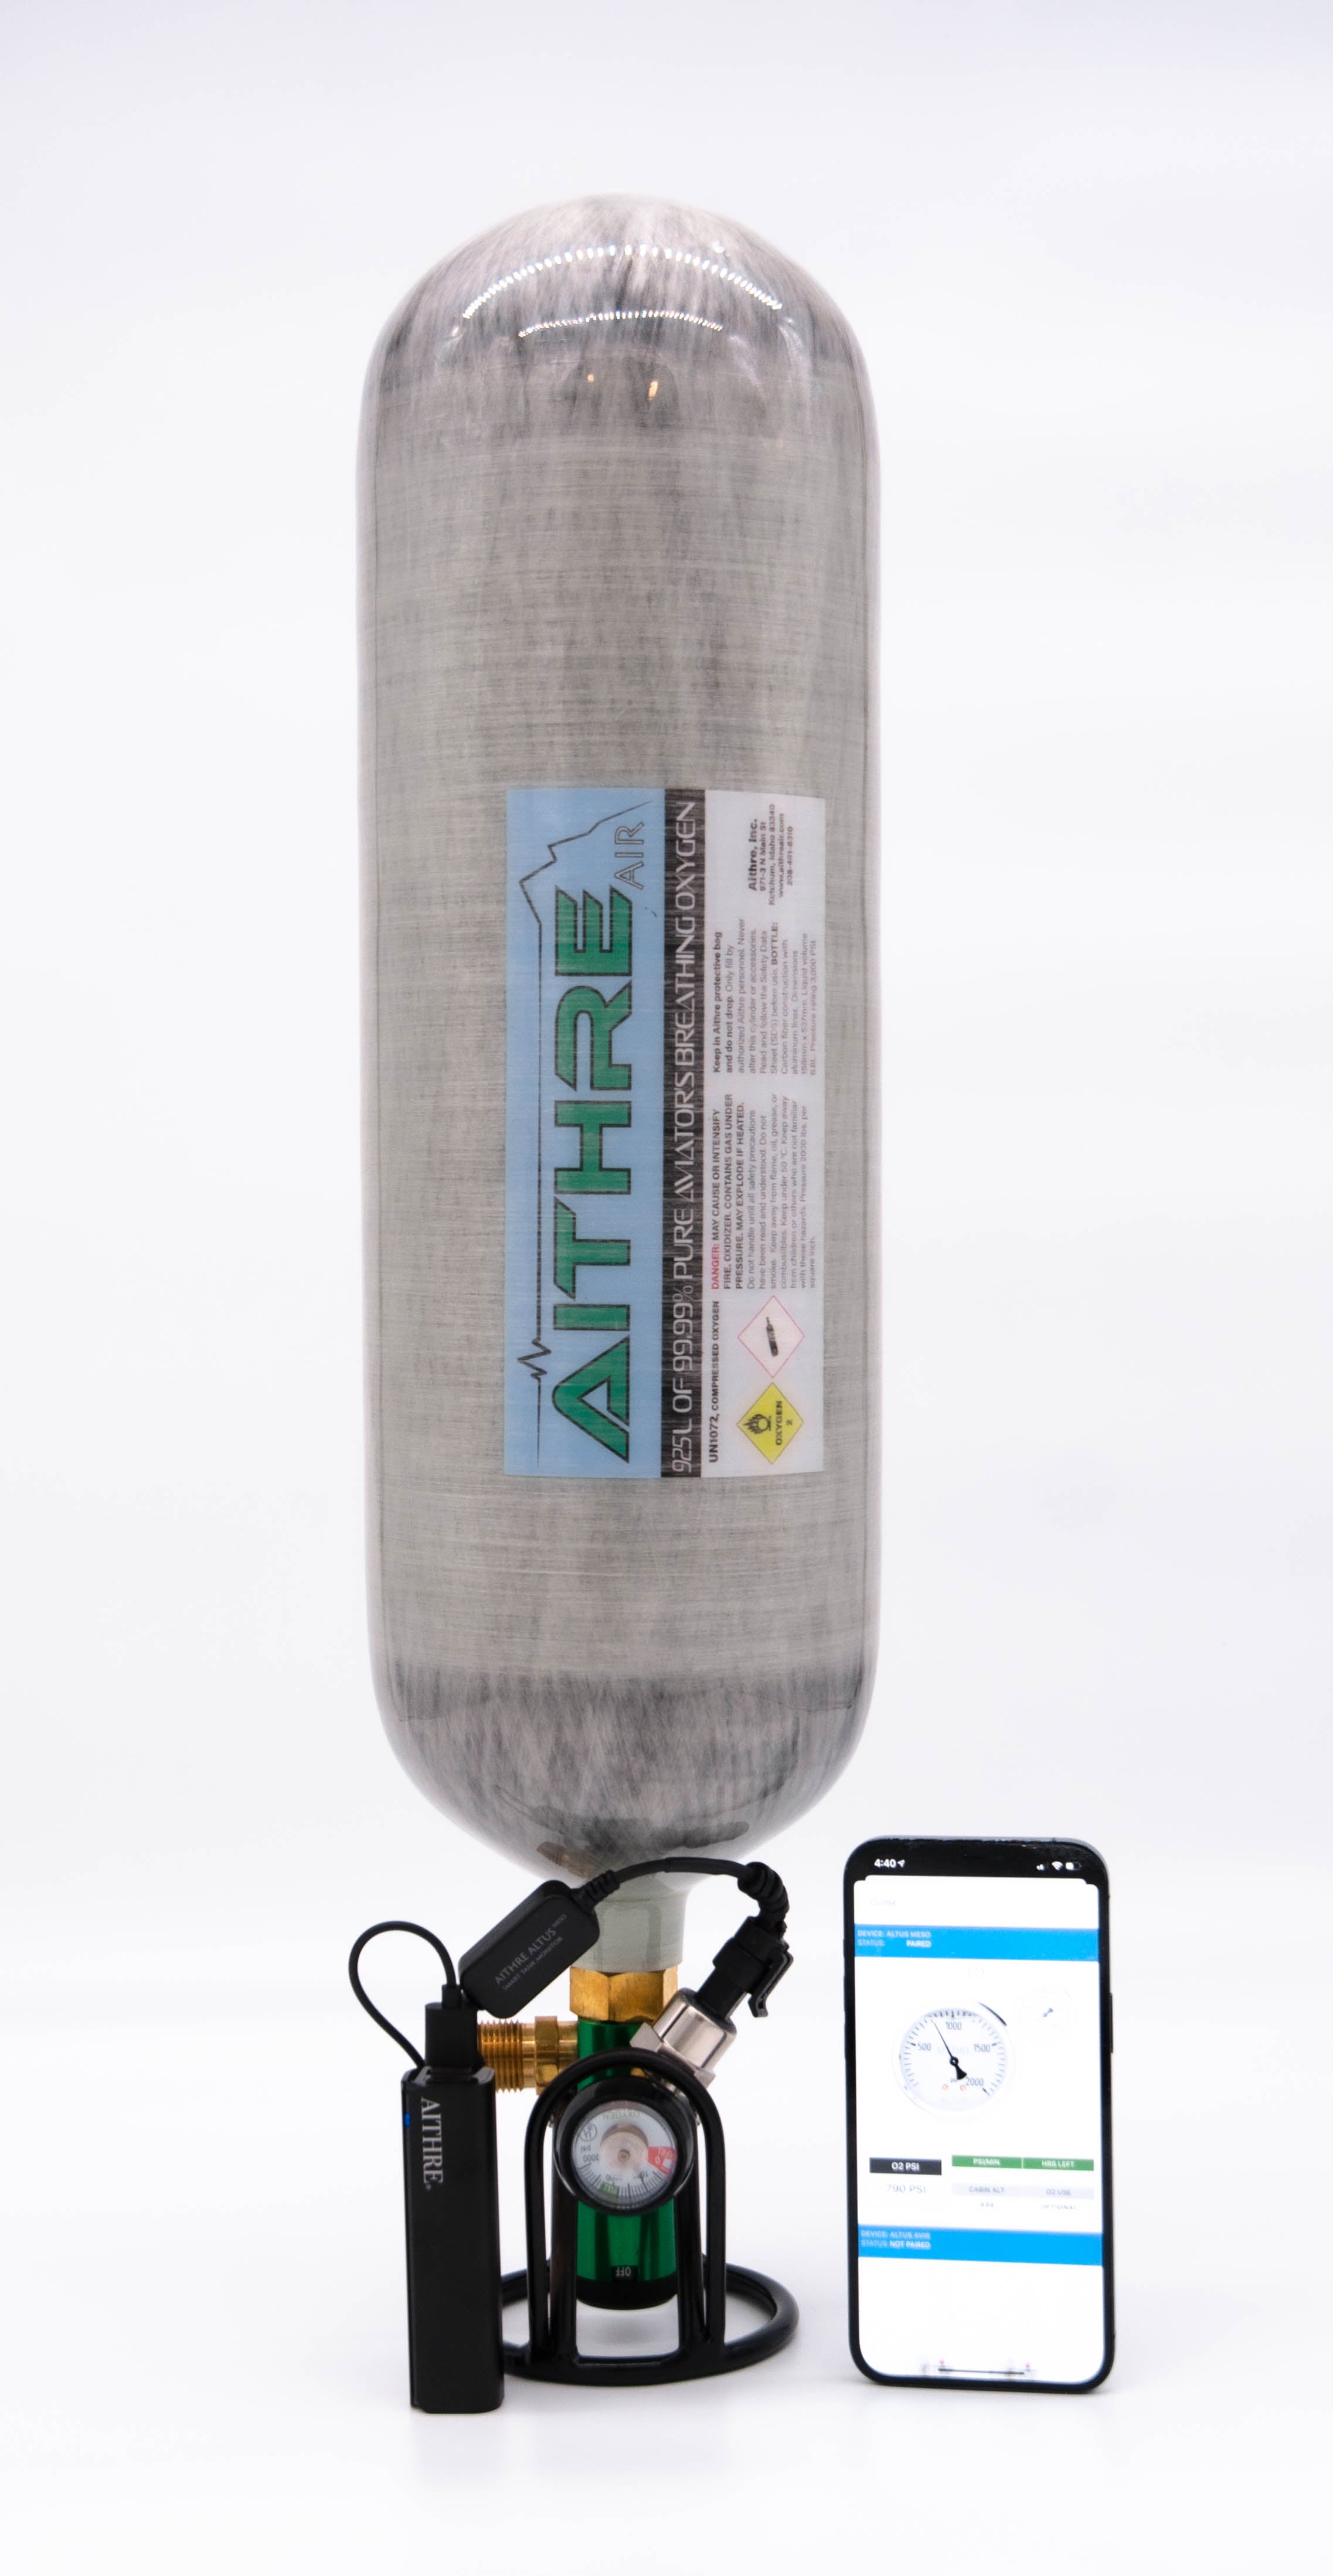 925L Bottle with Adjustable Constant Flow Regulator and Altus Meso